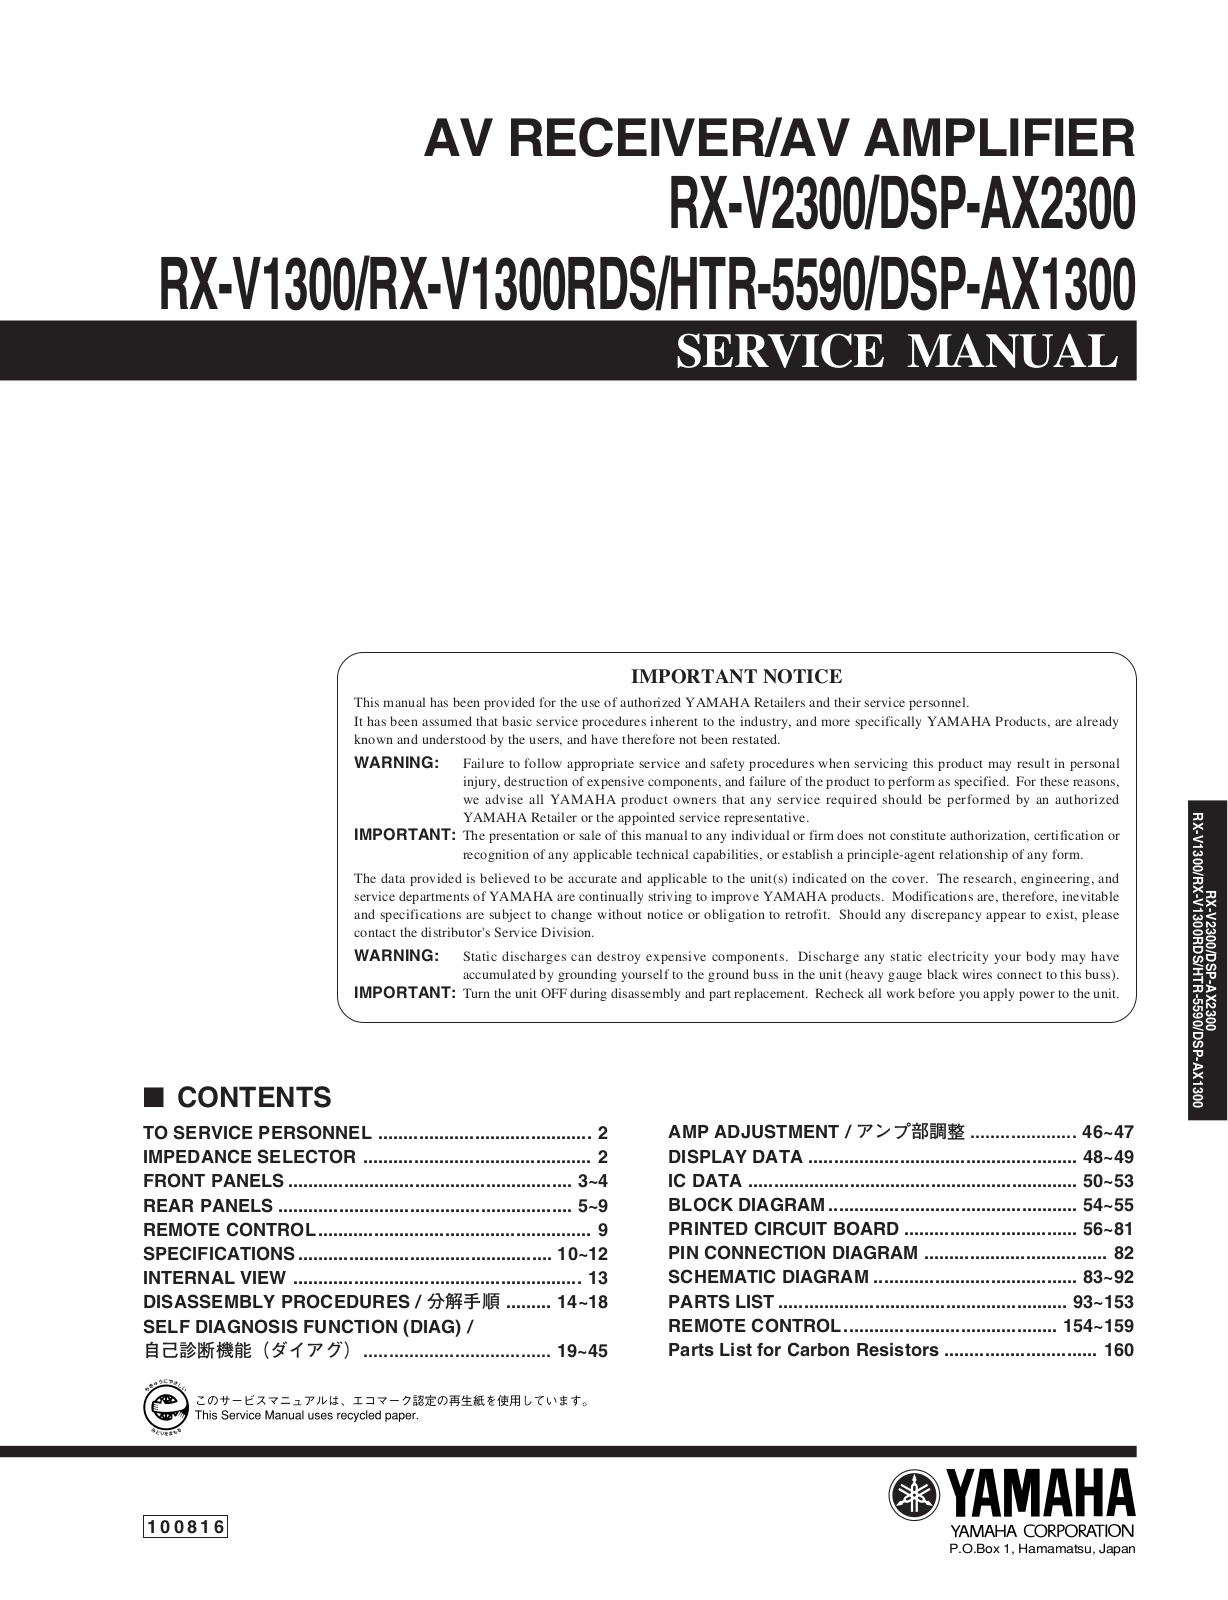 Yamaha RXV-1300 Service manual